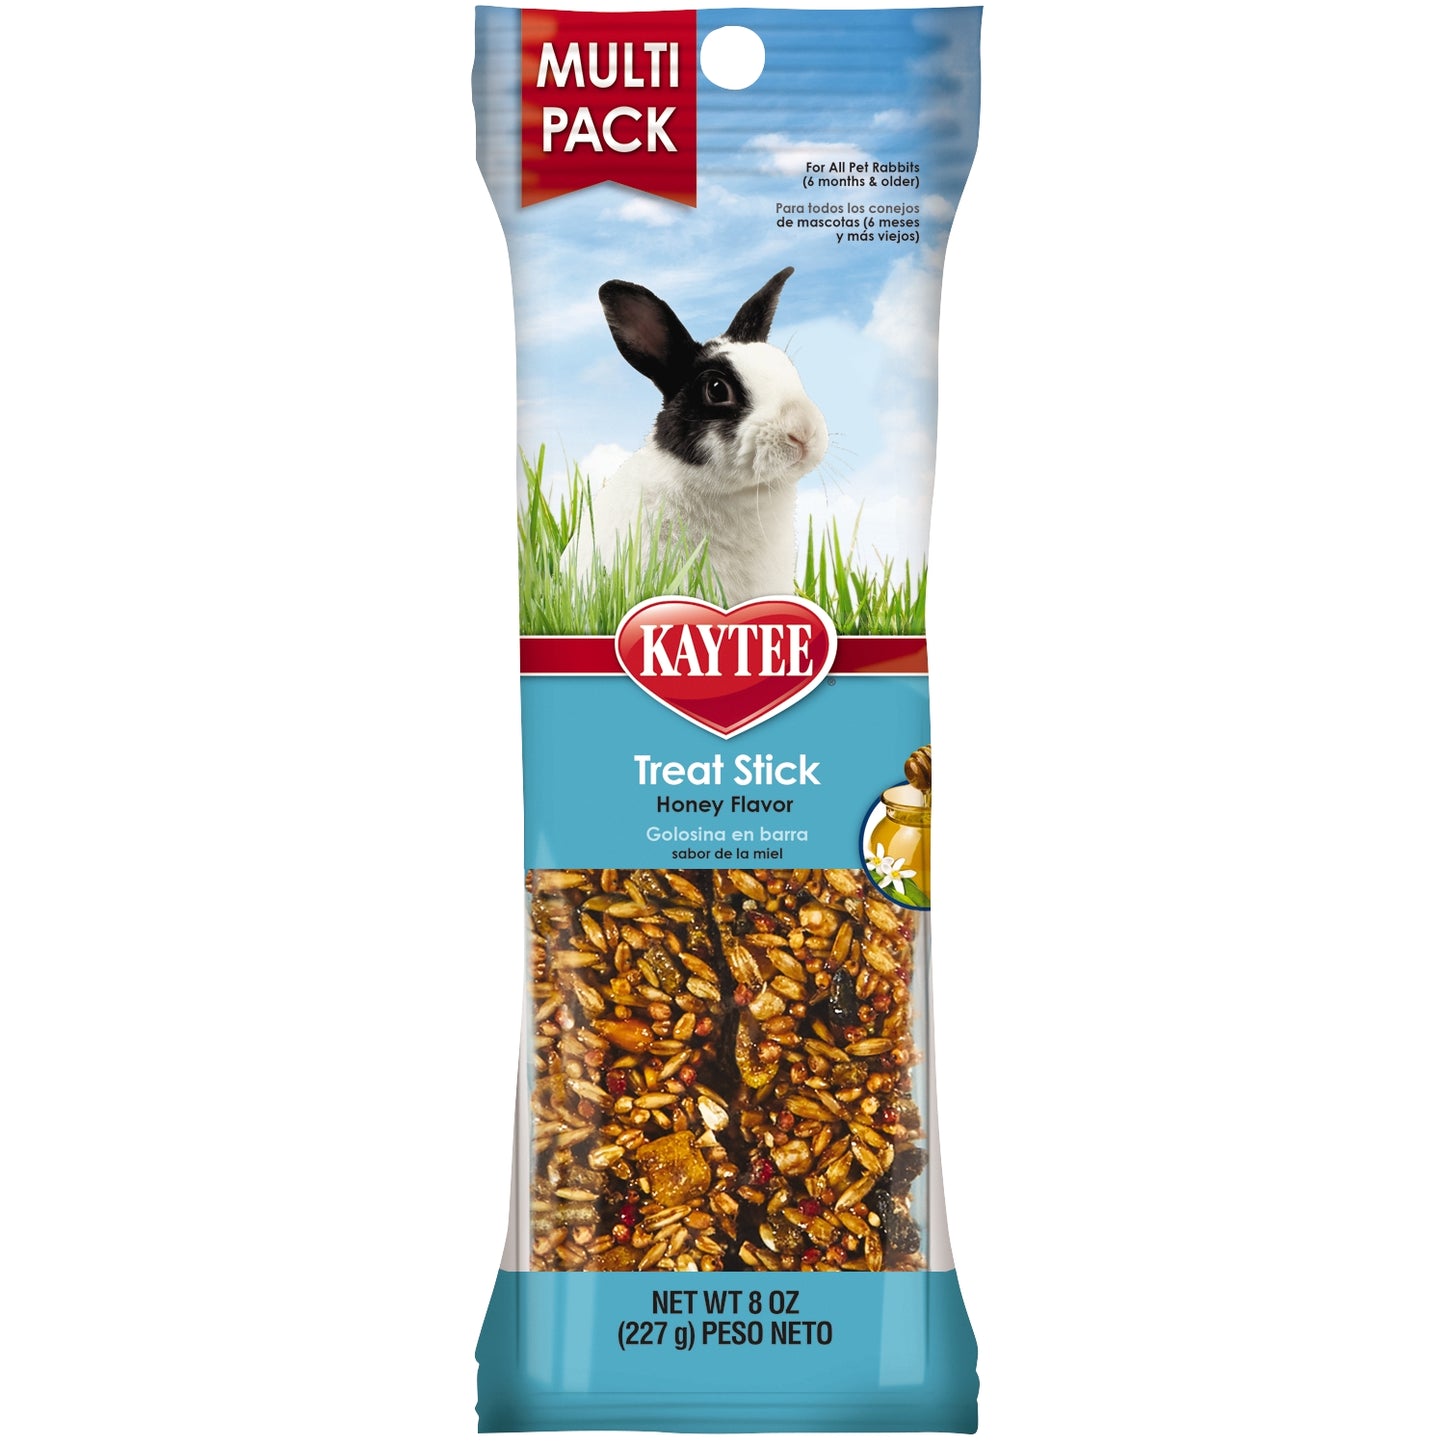 Kaytee® Treat Stick Honey Flavor Multi Pack for Rabbits